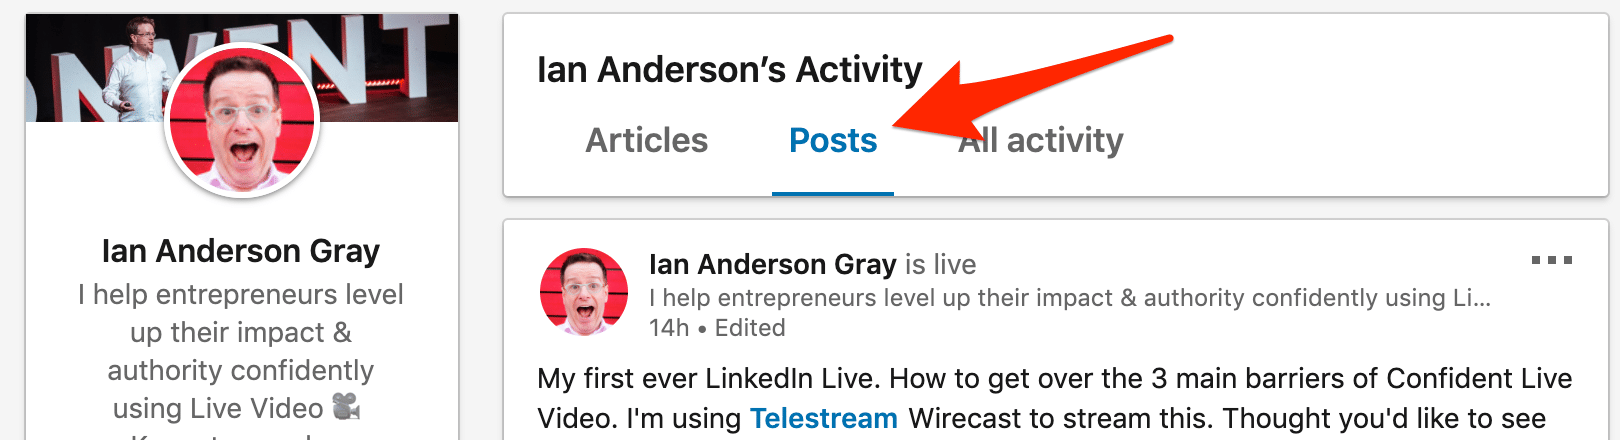 LinkedIn Live Activity